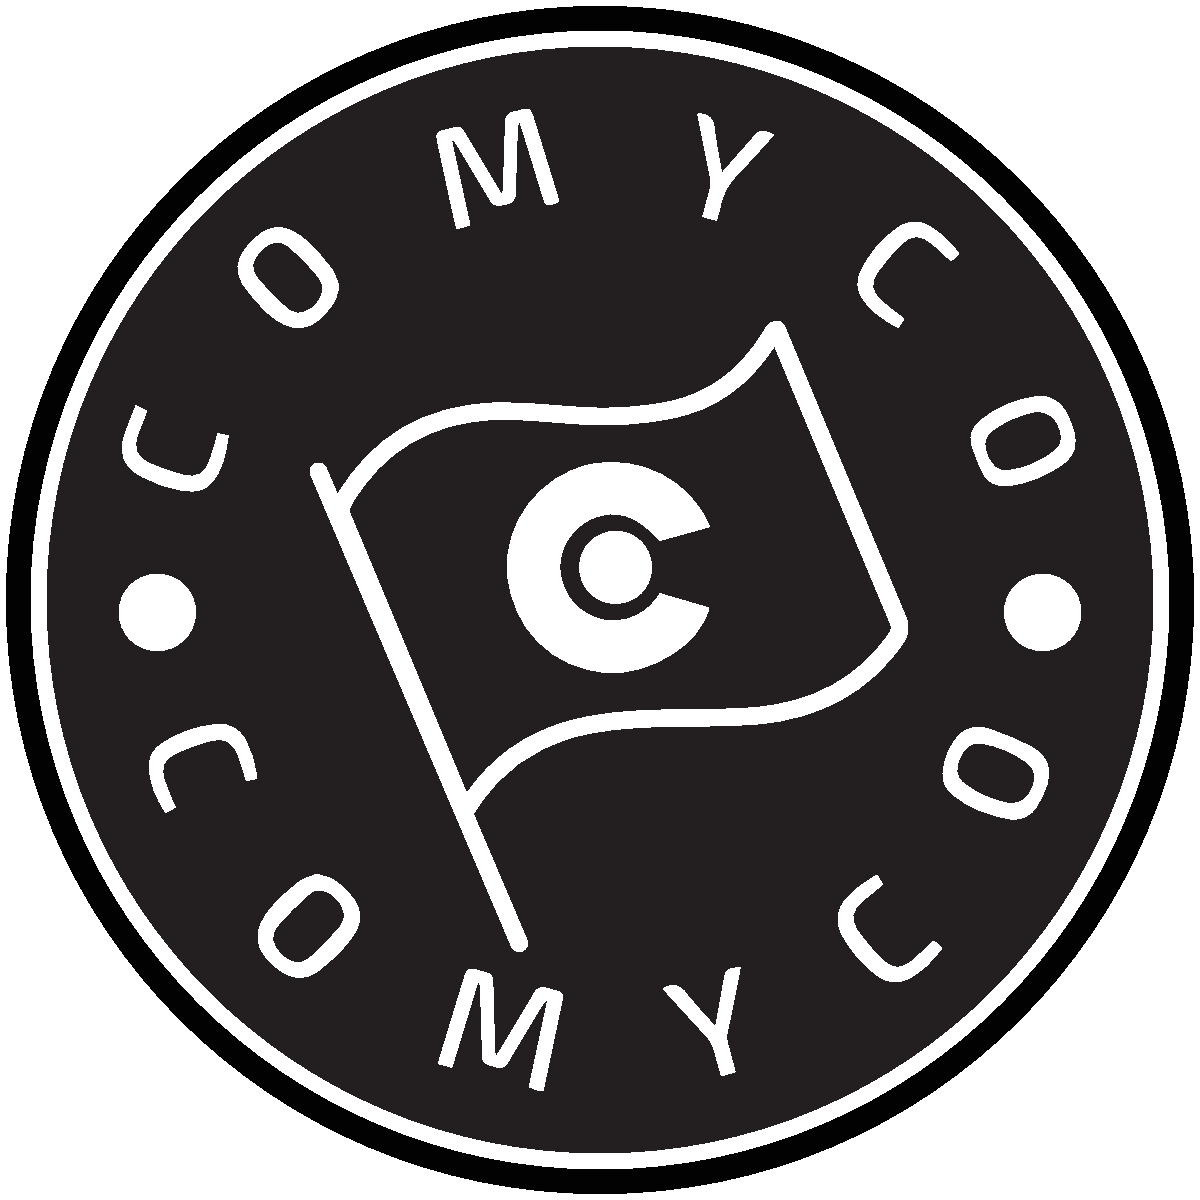 CoMyCo